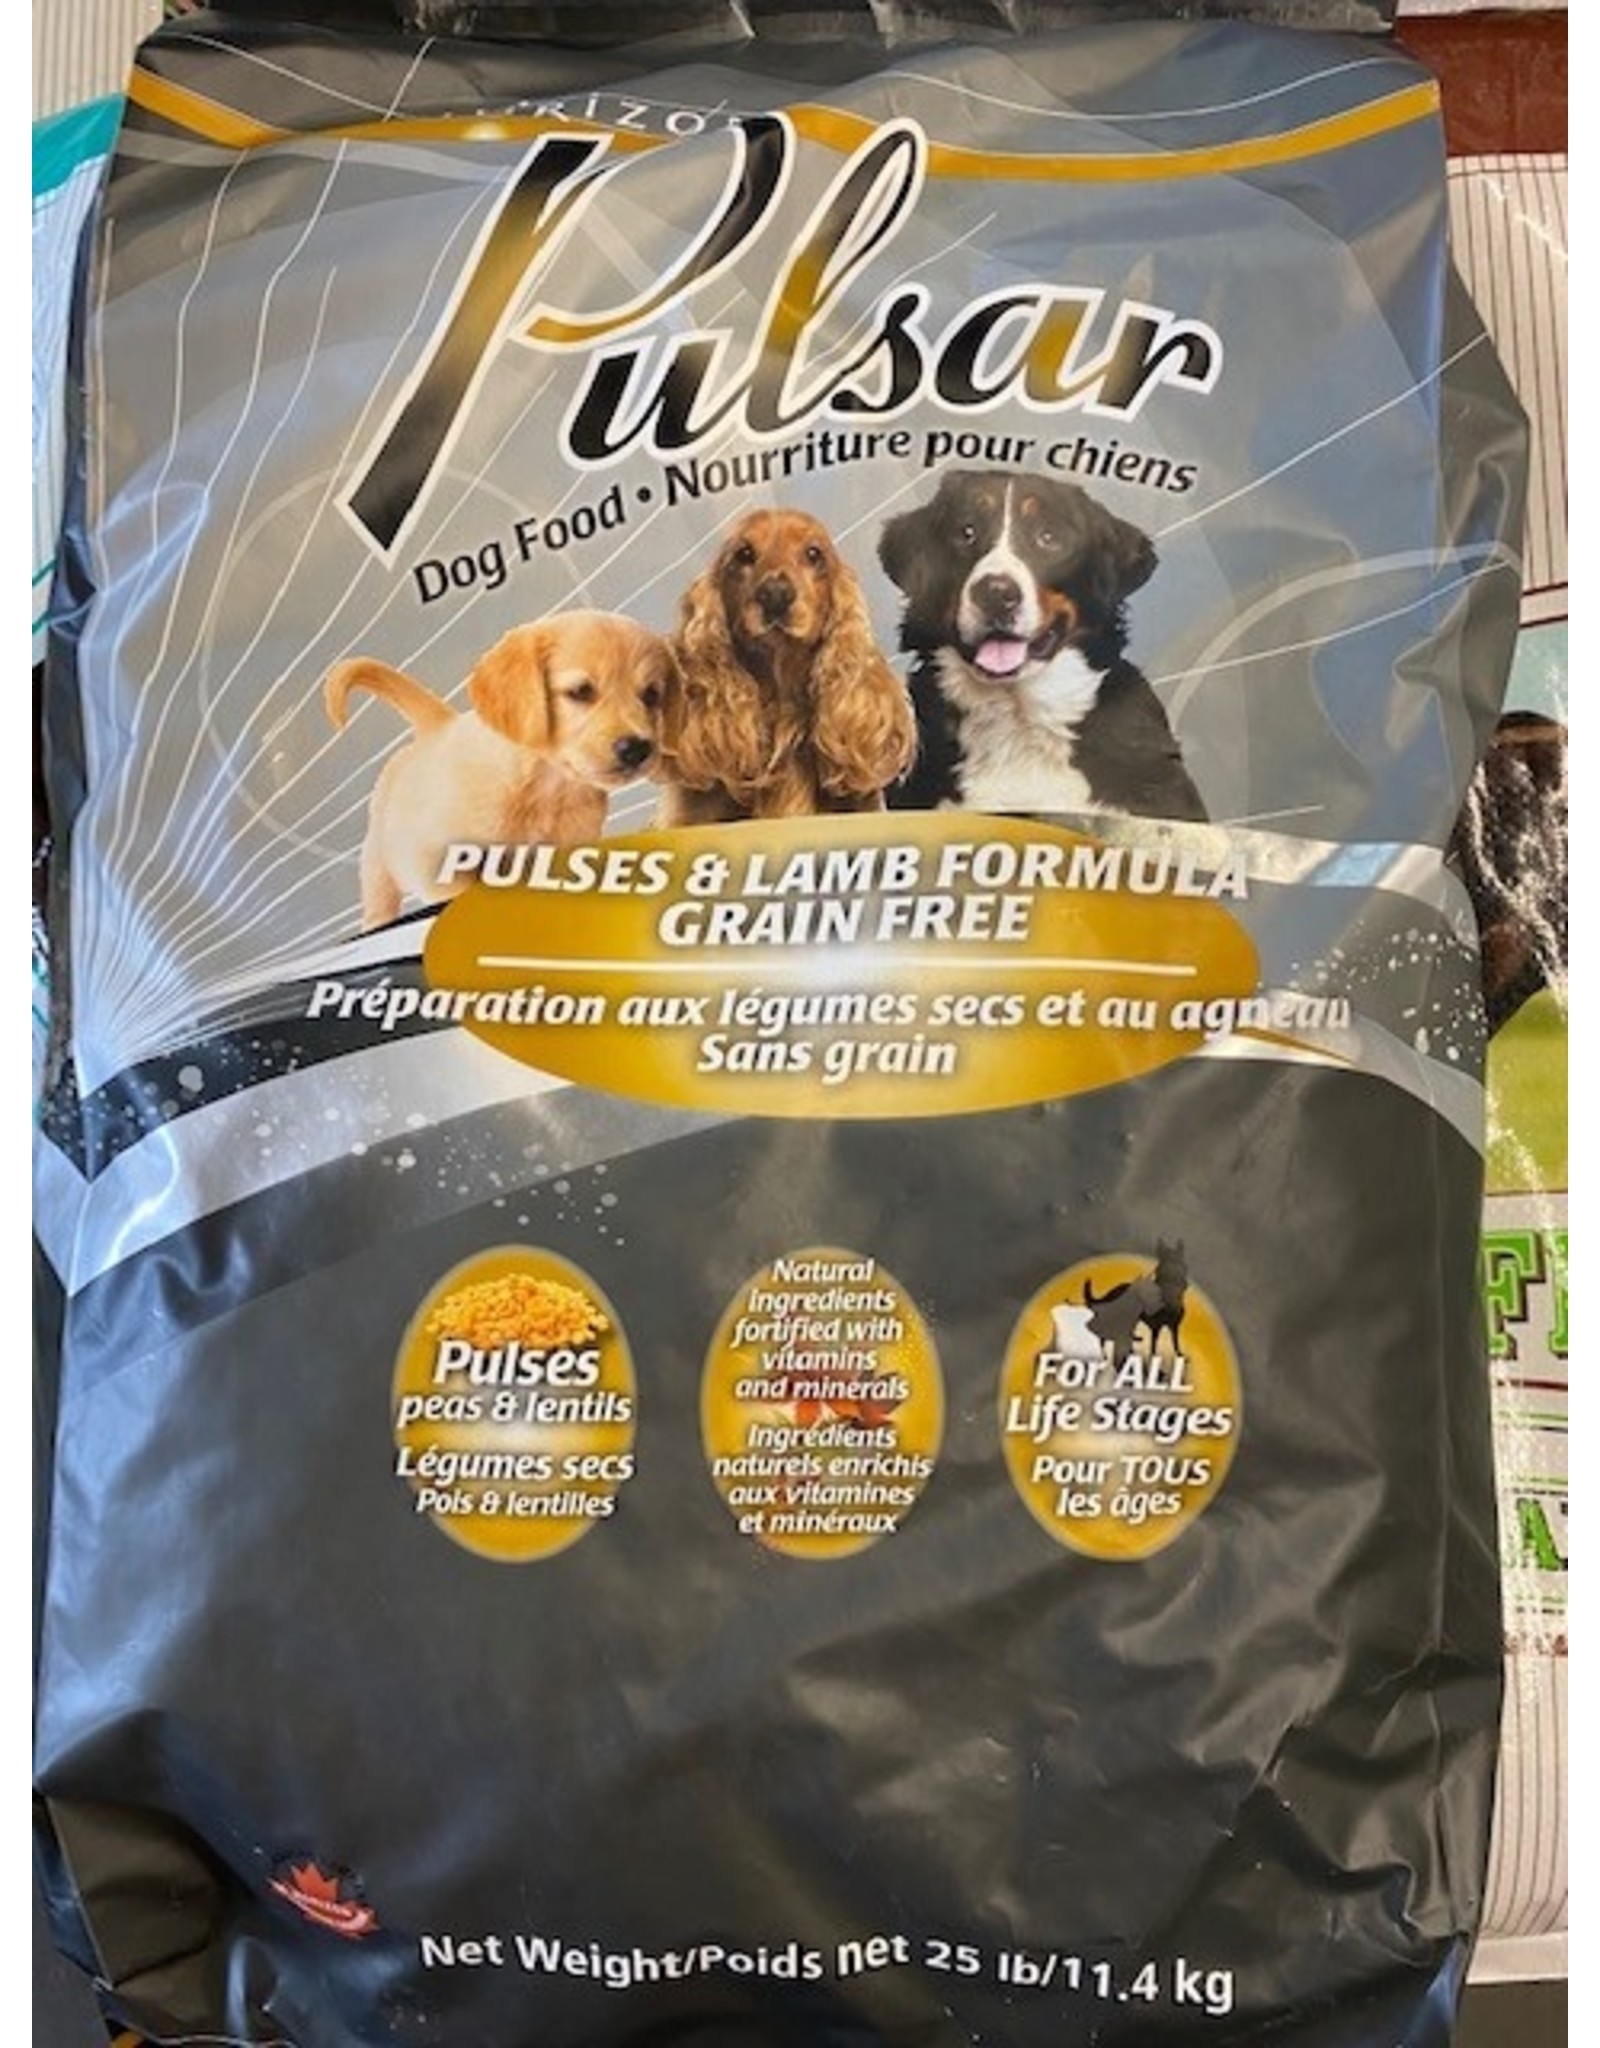 HORIZON PULSAR* Dog Food 20bpy Grain Free -  Lamb -25 lb  ( Green  Bag) All Life Stages 11.4kg 25/lb *AAAA    49170  (C-CAN)